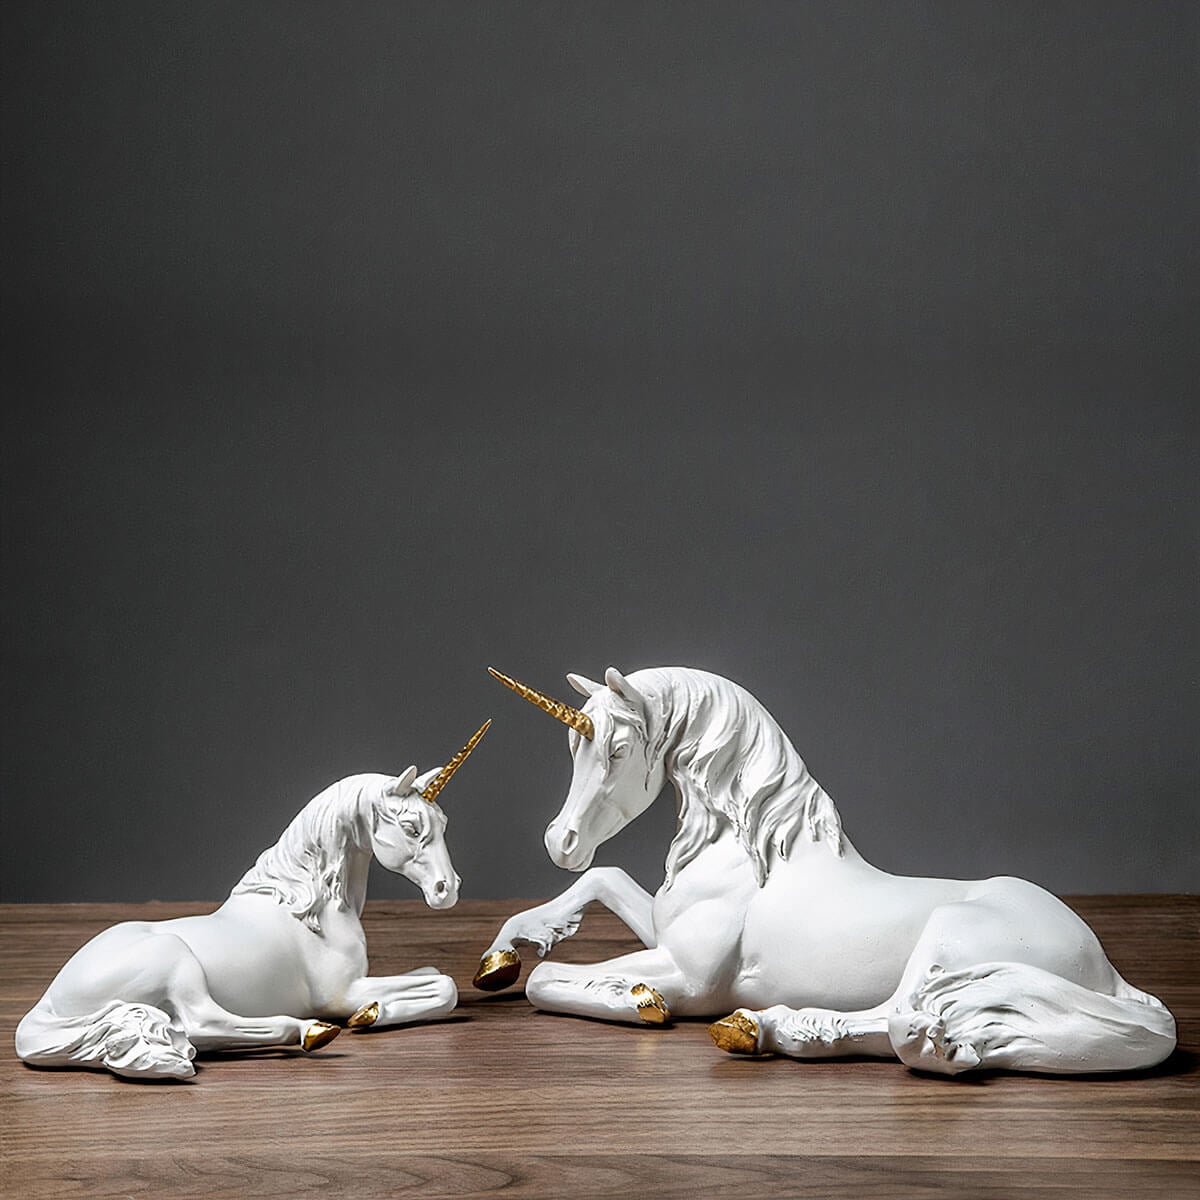 Unicorn Resin White Horse Statue Animal Modern Figurines